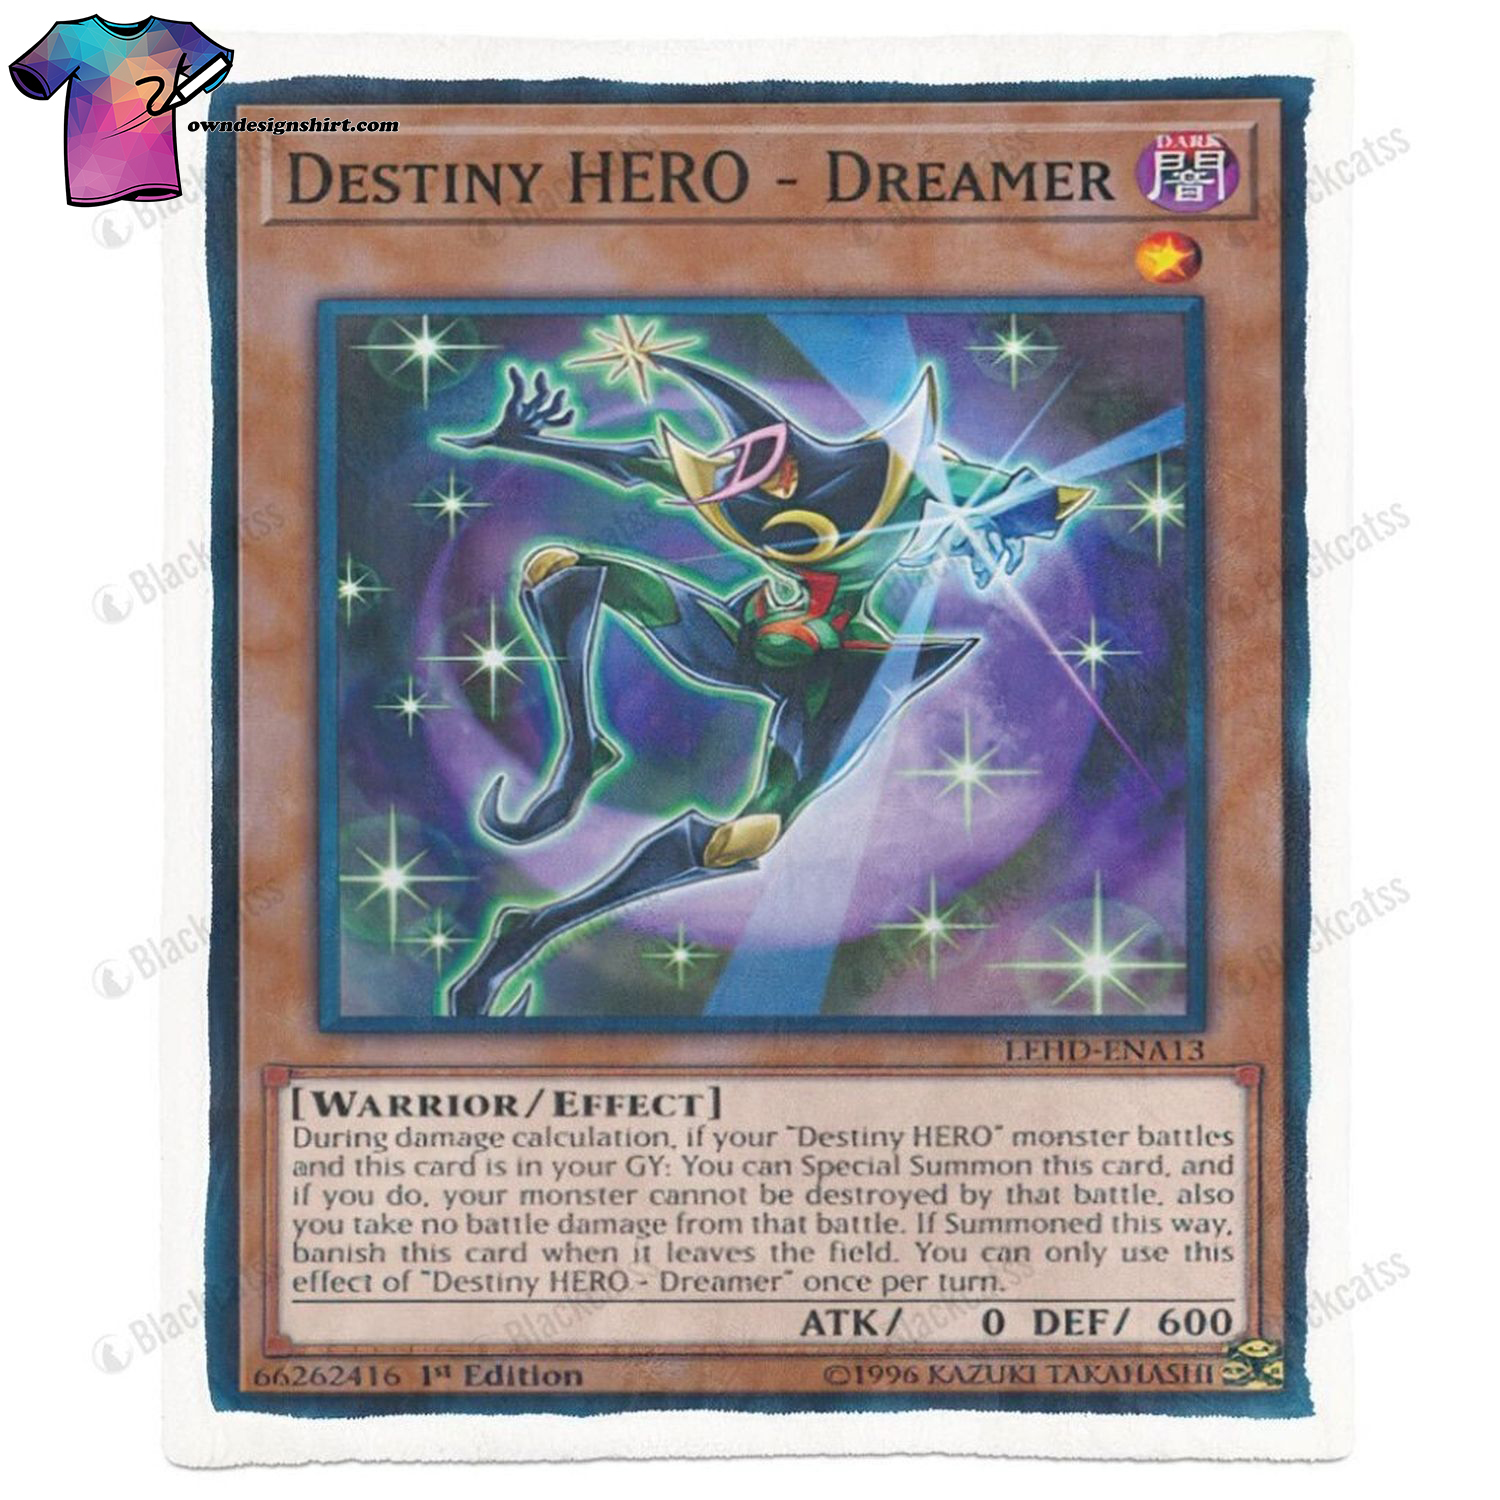 Game Yu-gi-oh Destiny HERO Dreamer Full Print Soft Blanket